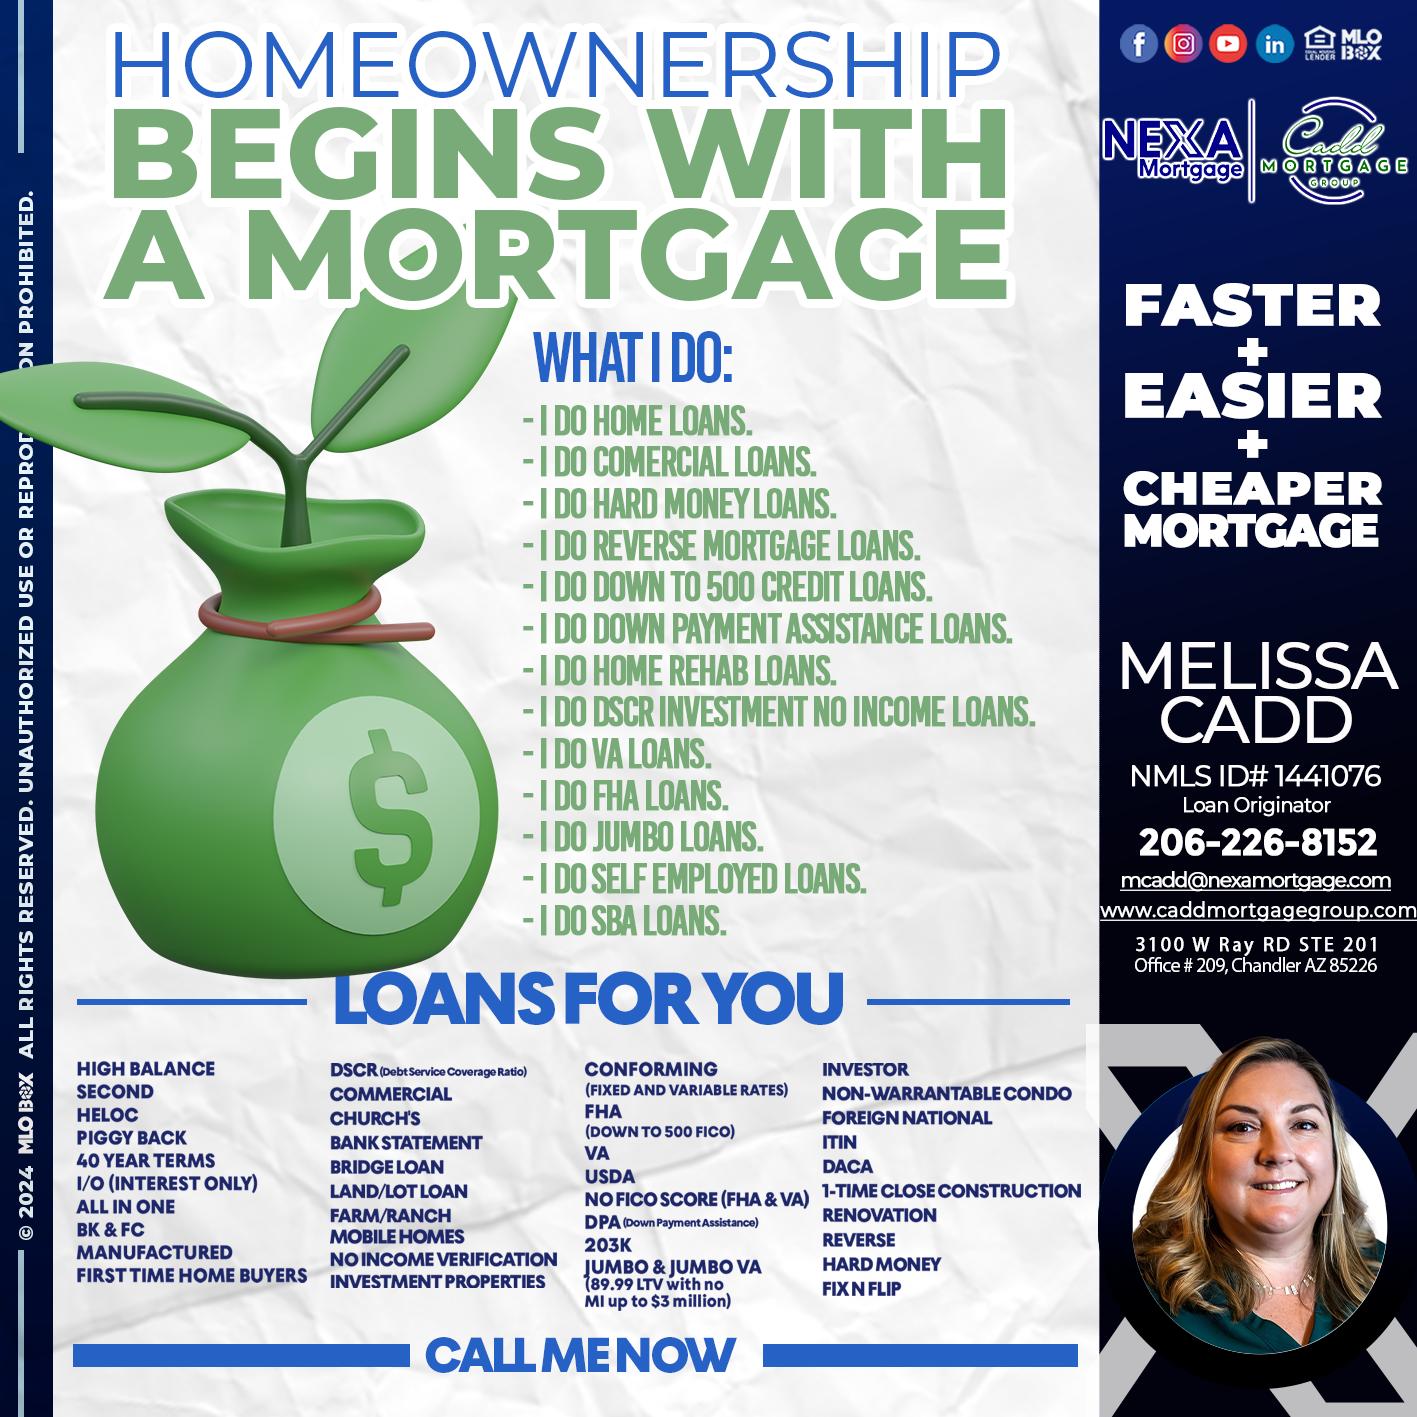 HOME OWNERSHIP - Melissa Cadd -Loan Originator